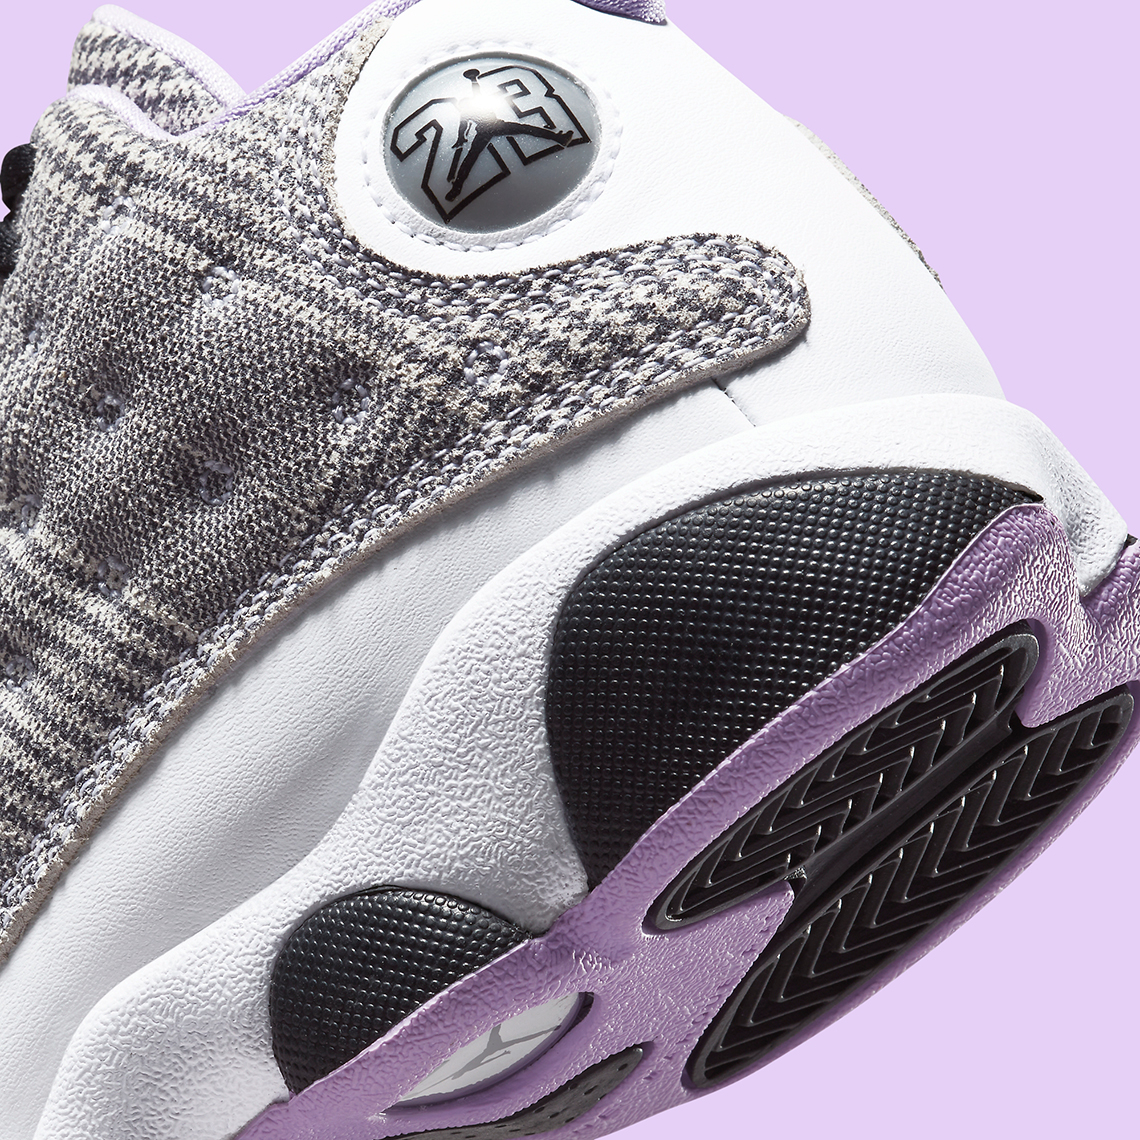 Air Jordan 13 Houndstooth GS PS TD Release Date | SneakerNews.com